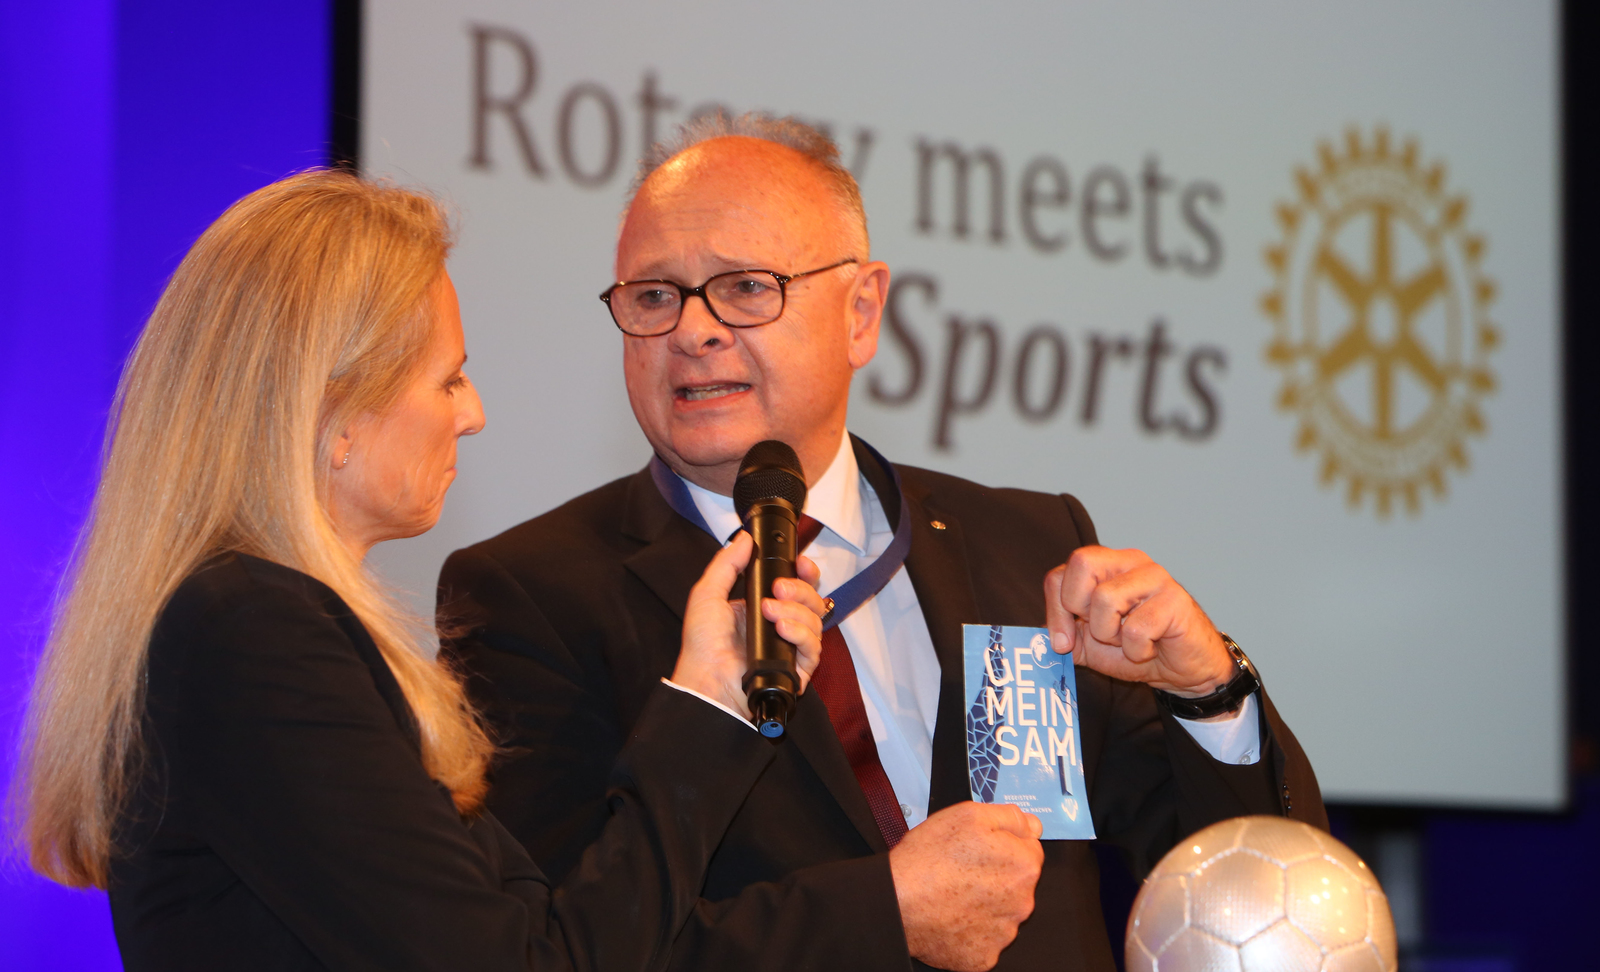 2018, rotary meets sports, ismael sadek, governor, wien